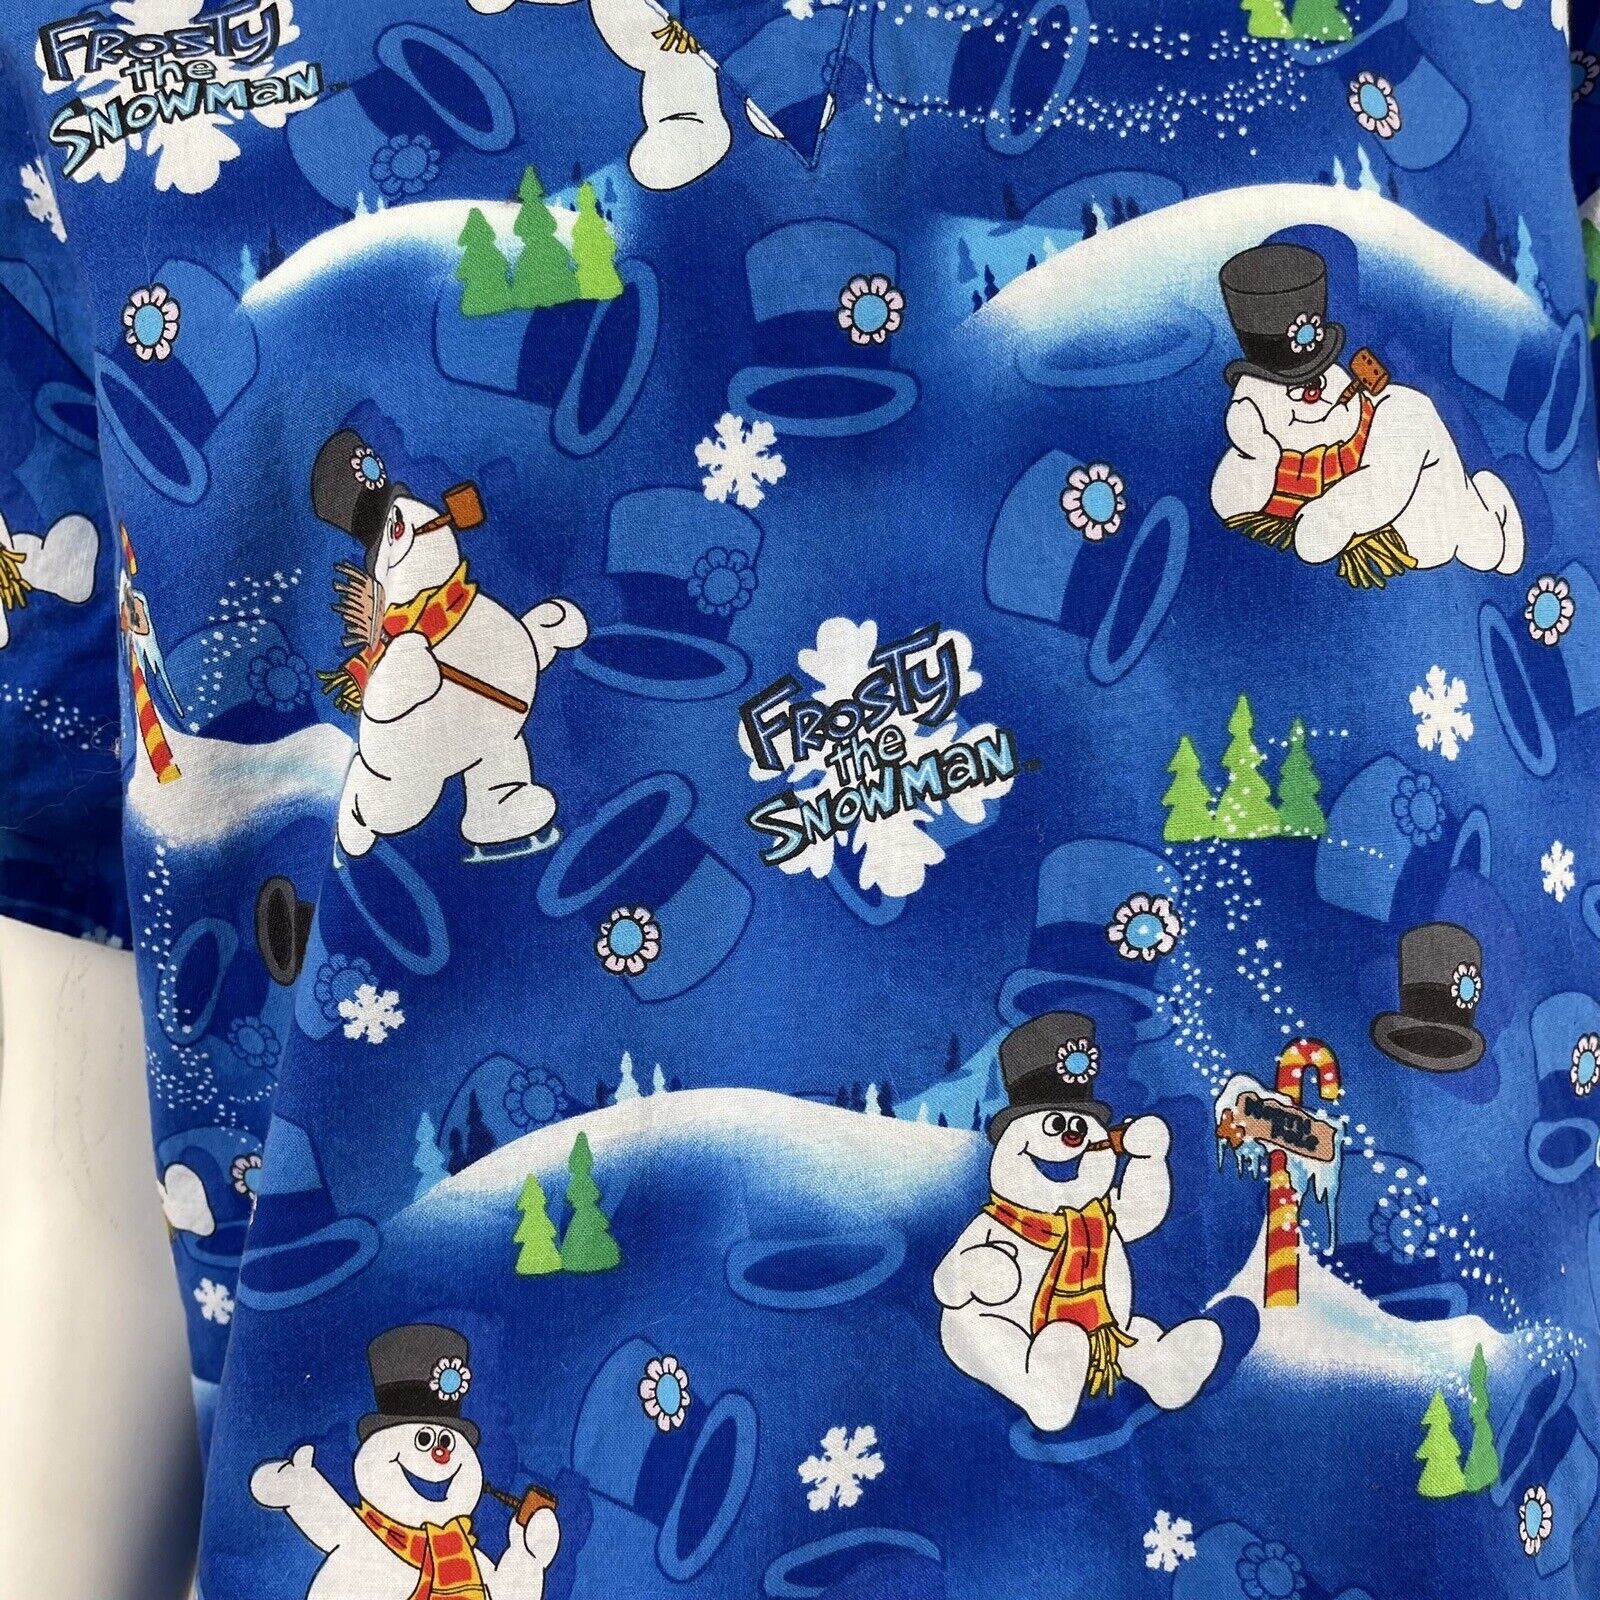 Frosty The Snowman Uniform/Scrub Top - image 2